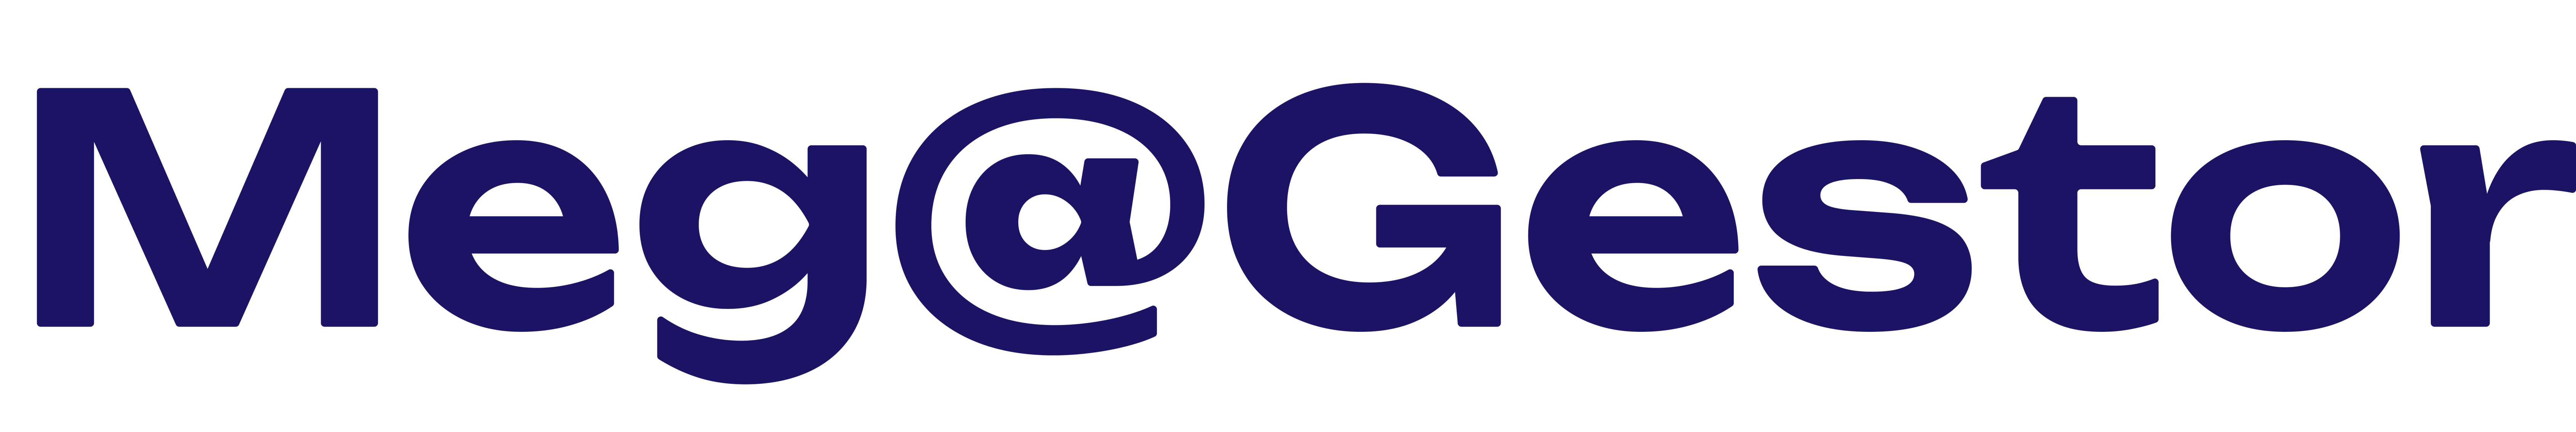 logo_Mega